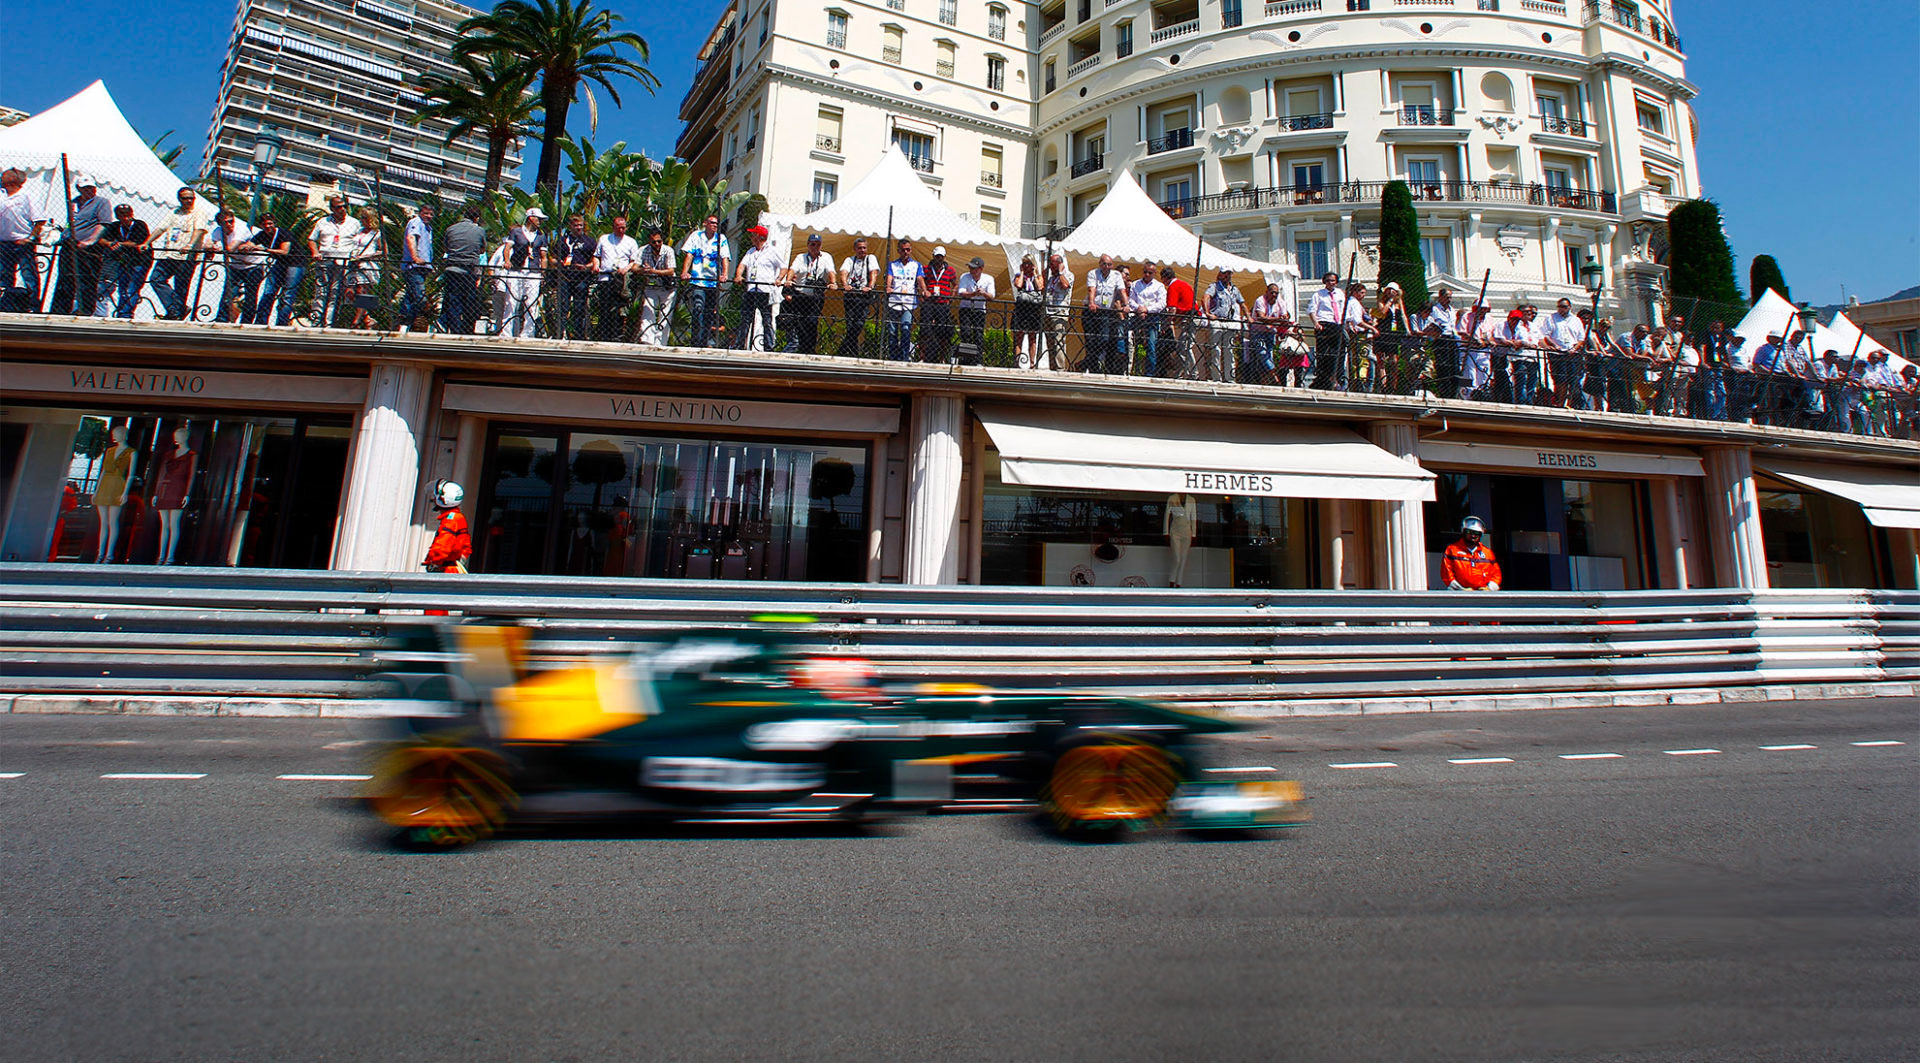 Top 5 highlights at the Monaco Grand Prix